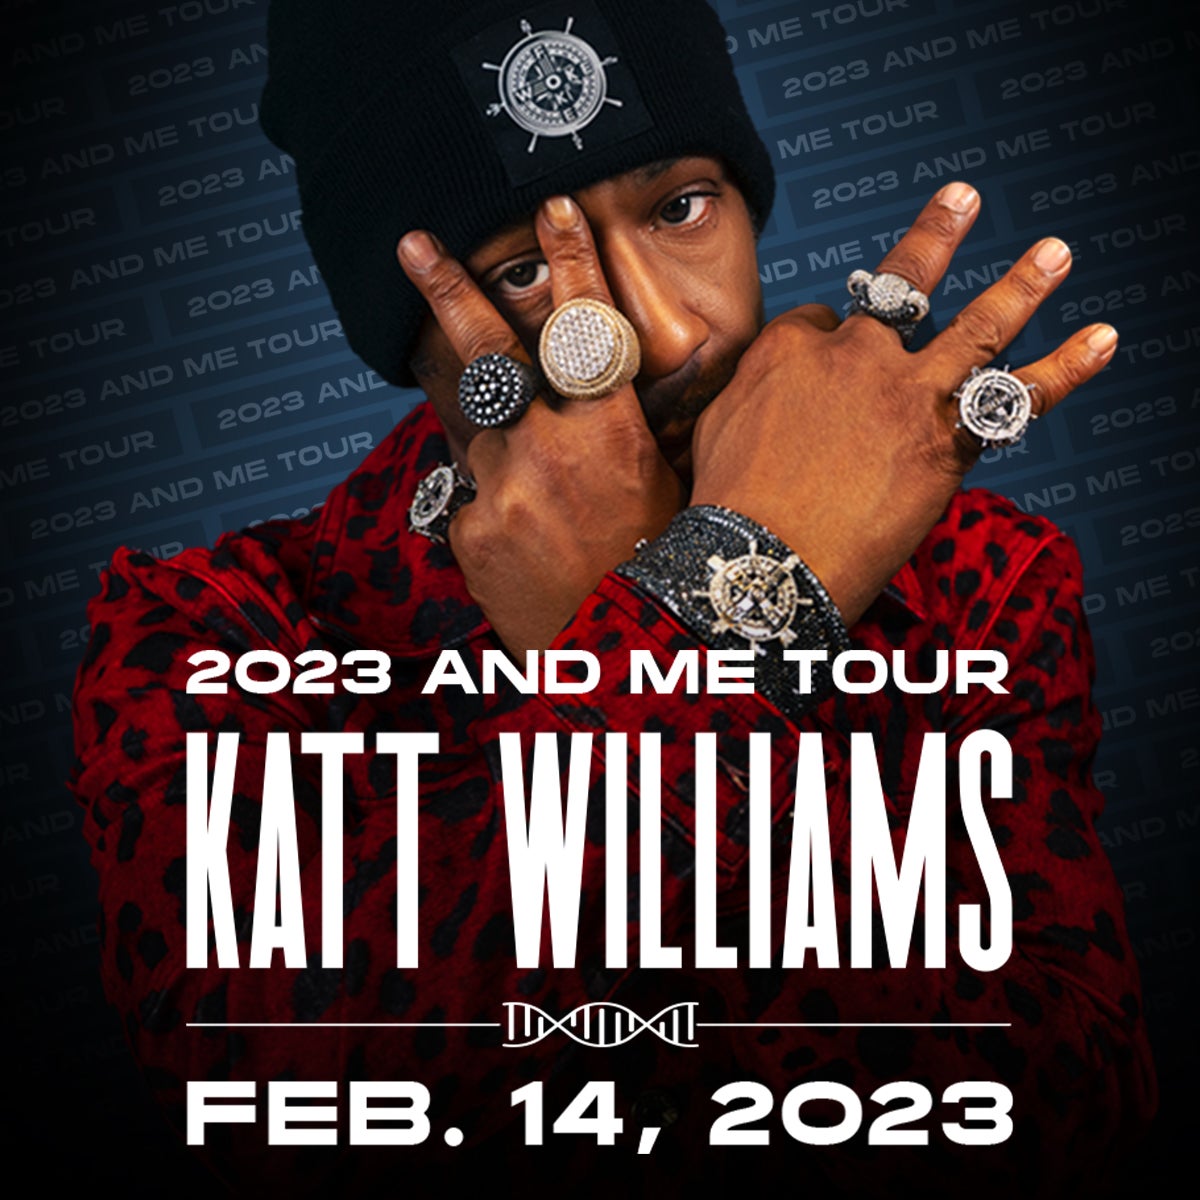 katt williams comedy tour 2023